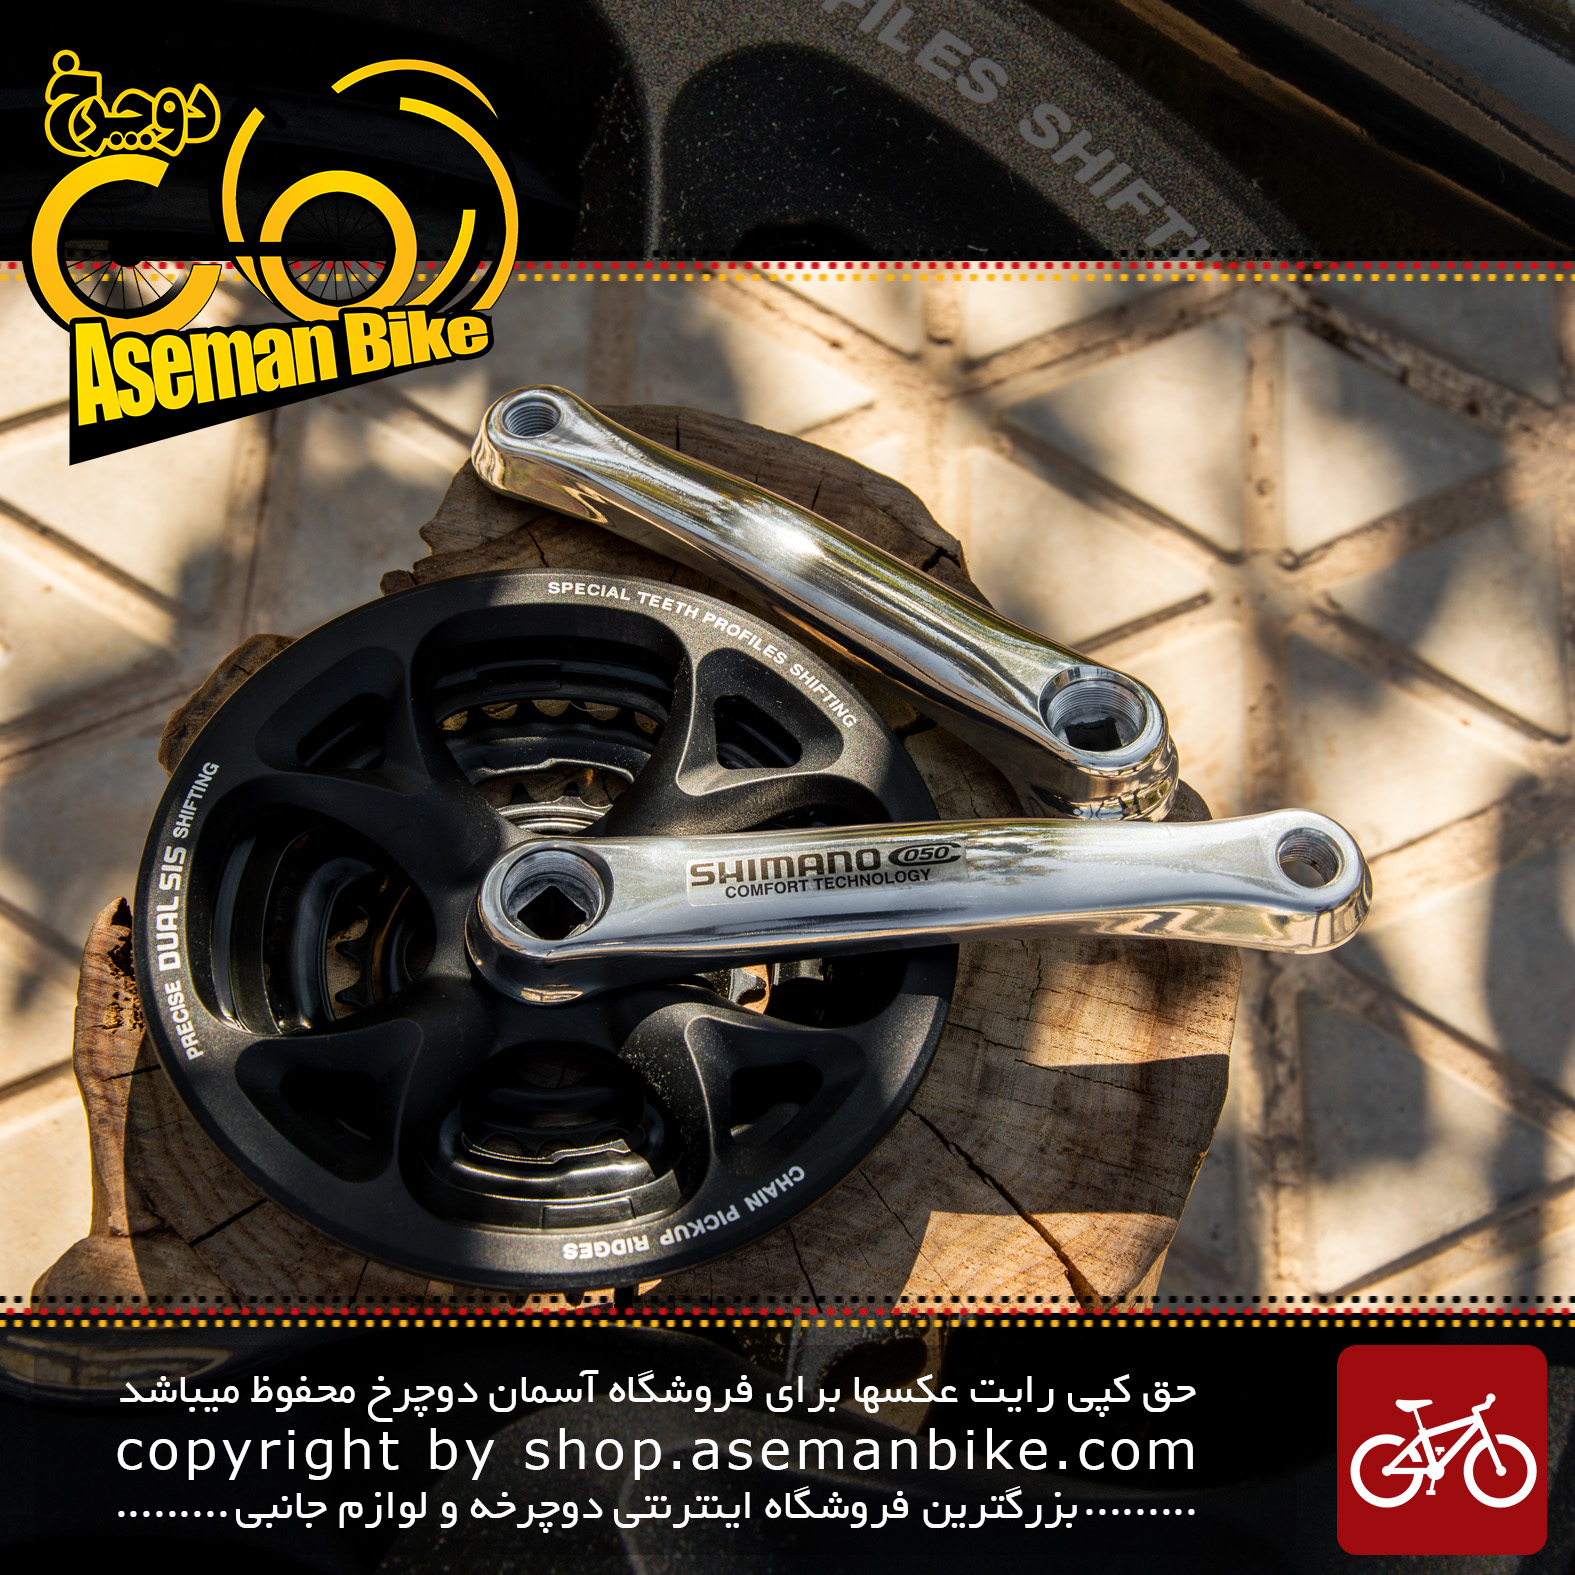 طبق قامه دوچرخه شیمانو تکنولوژی کامفورت سیستم سیس دوگانه مدل سی 050 48-38-28 دندانه سه سرعته Shimano Bicycle Crankset Comfort Technology C050